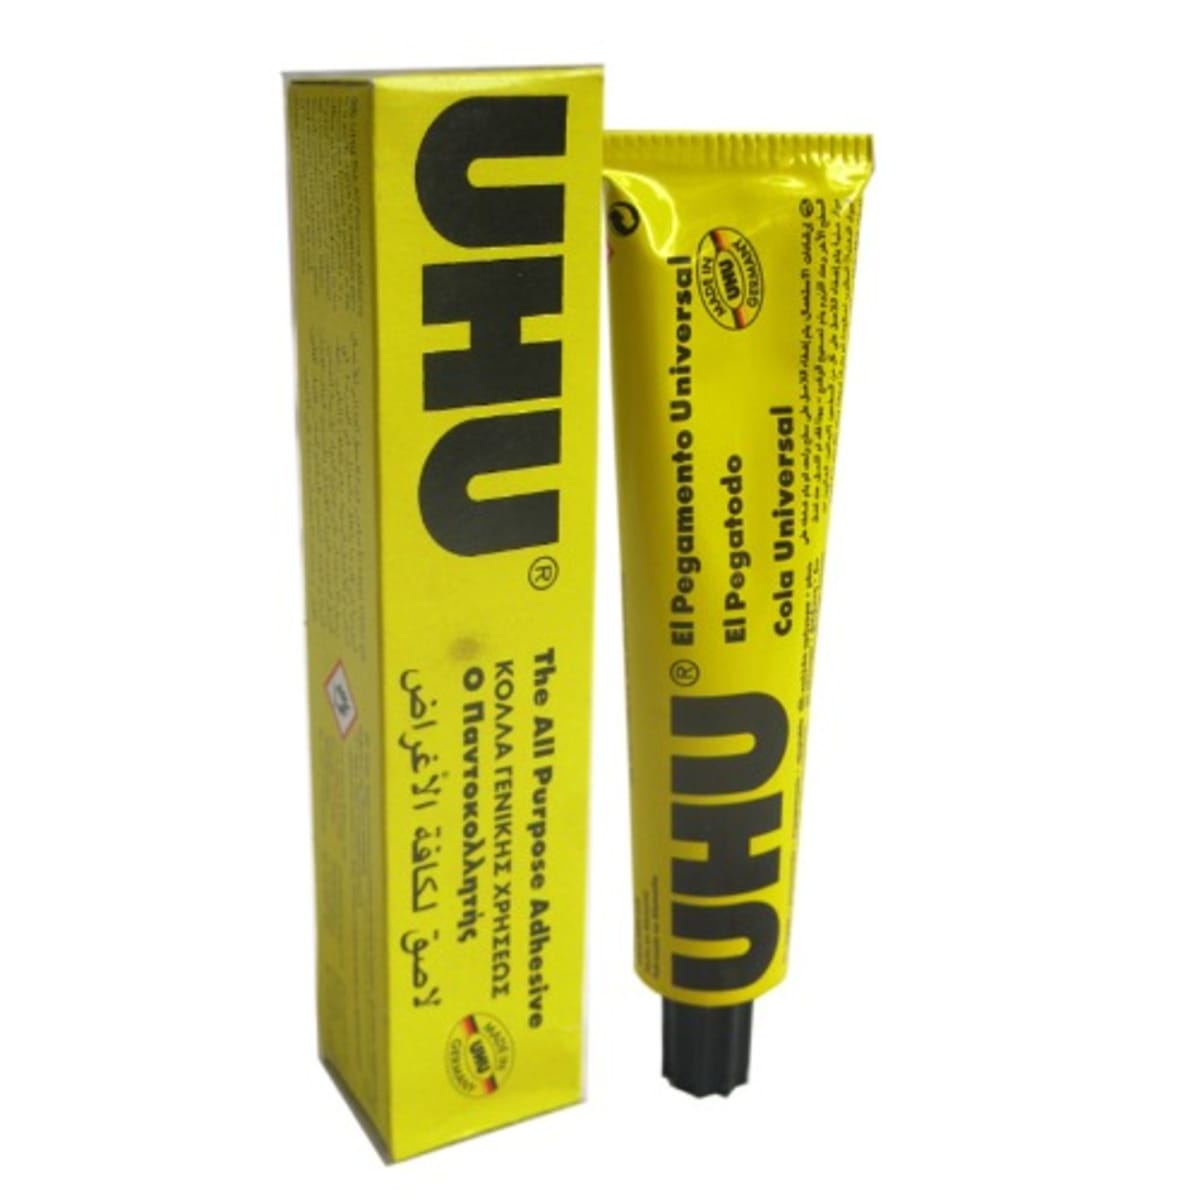 UHU Adhesive Glue Gum - 60ml